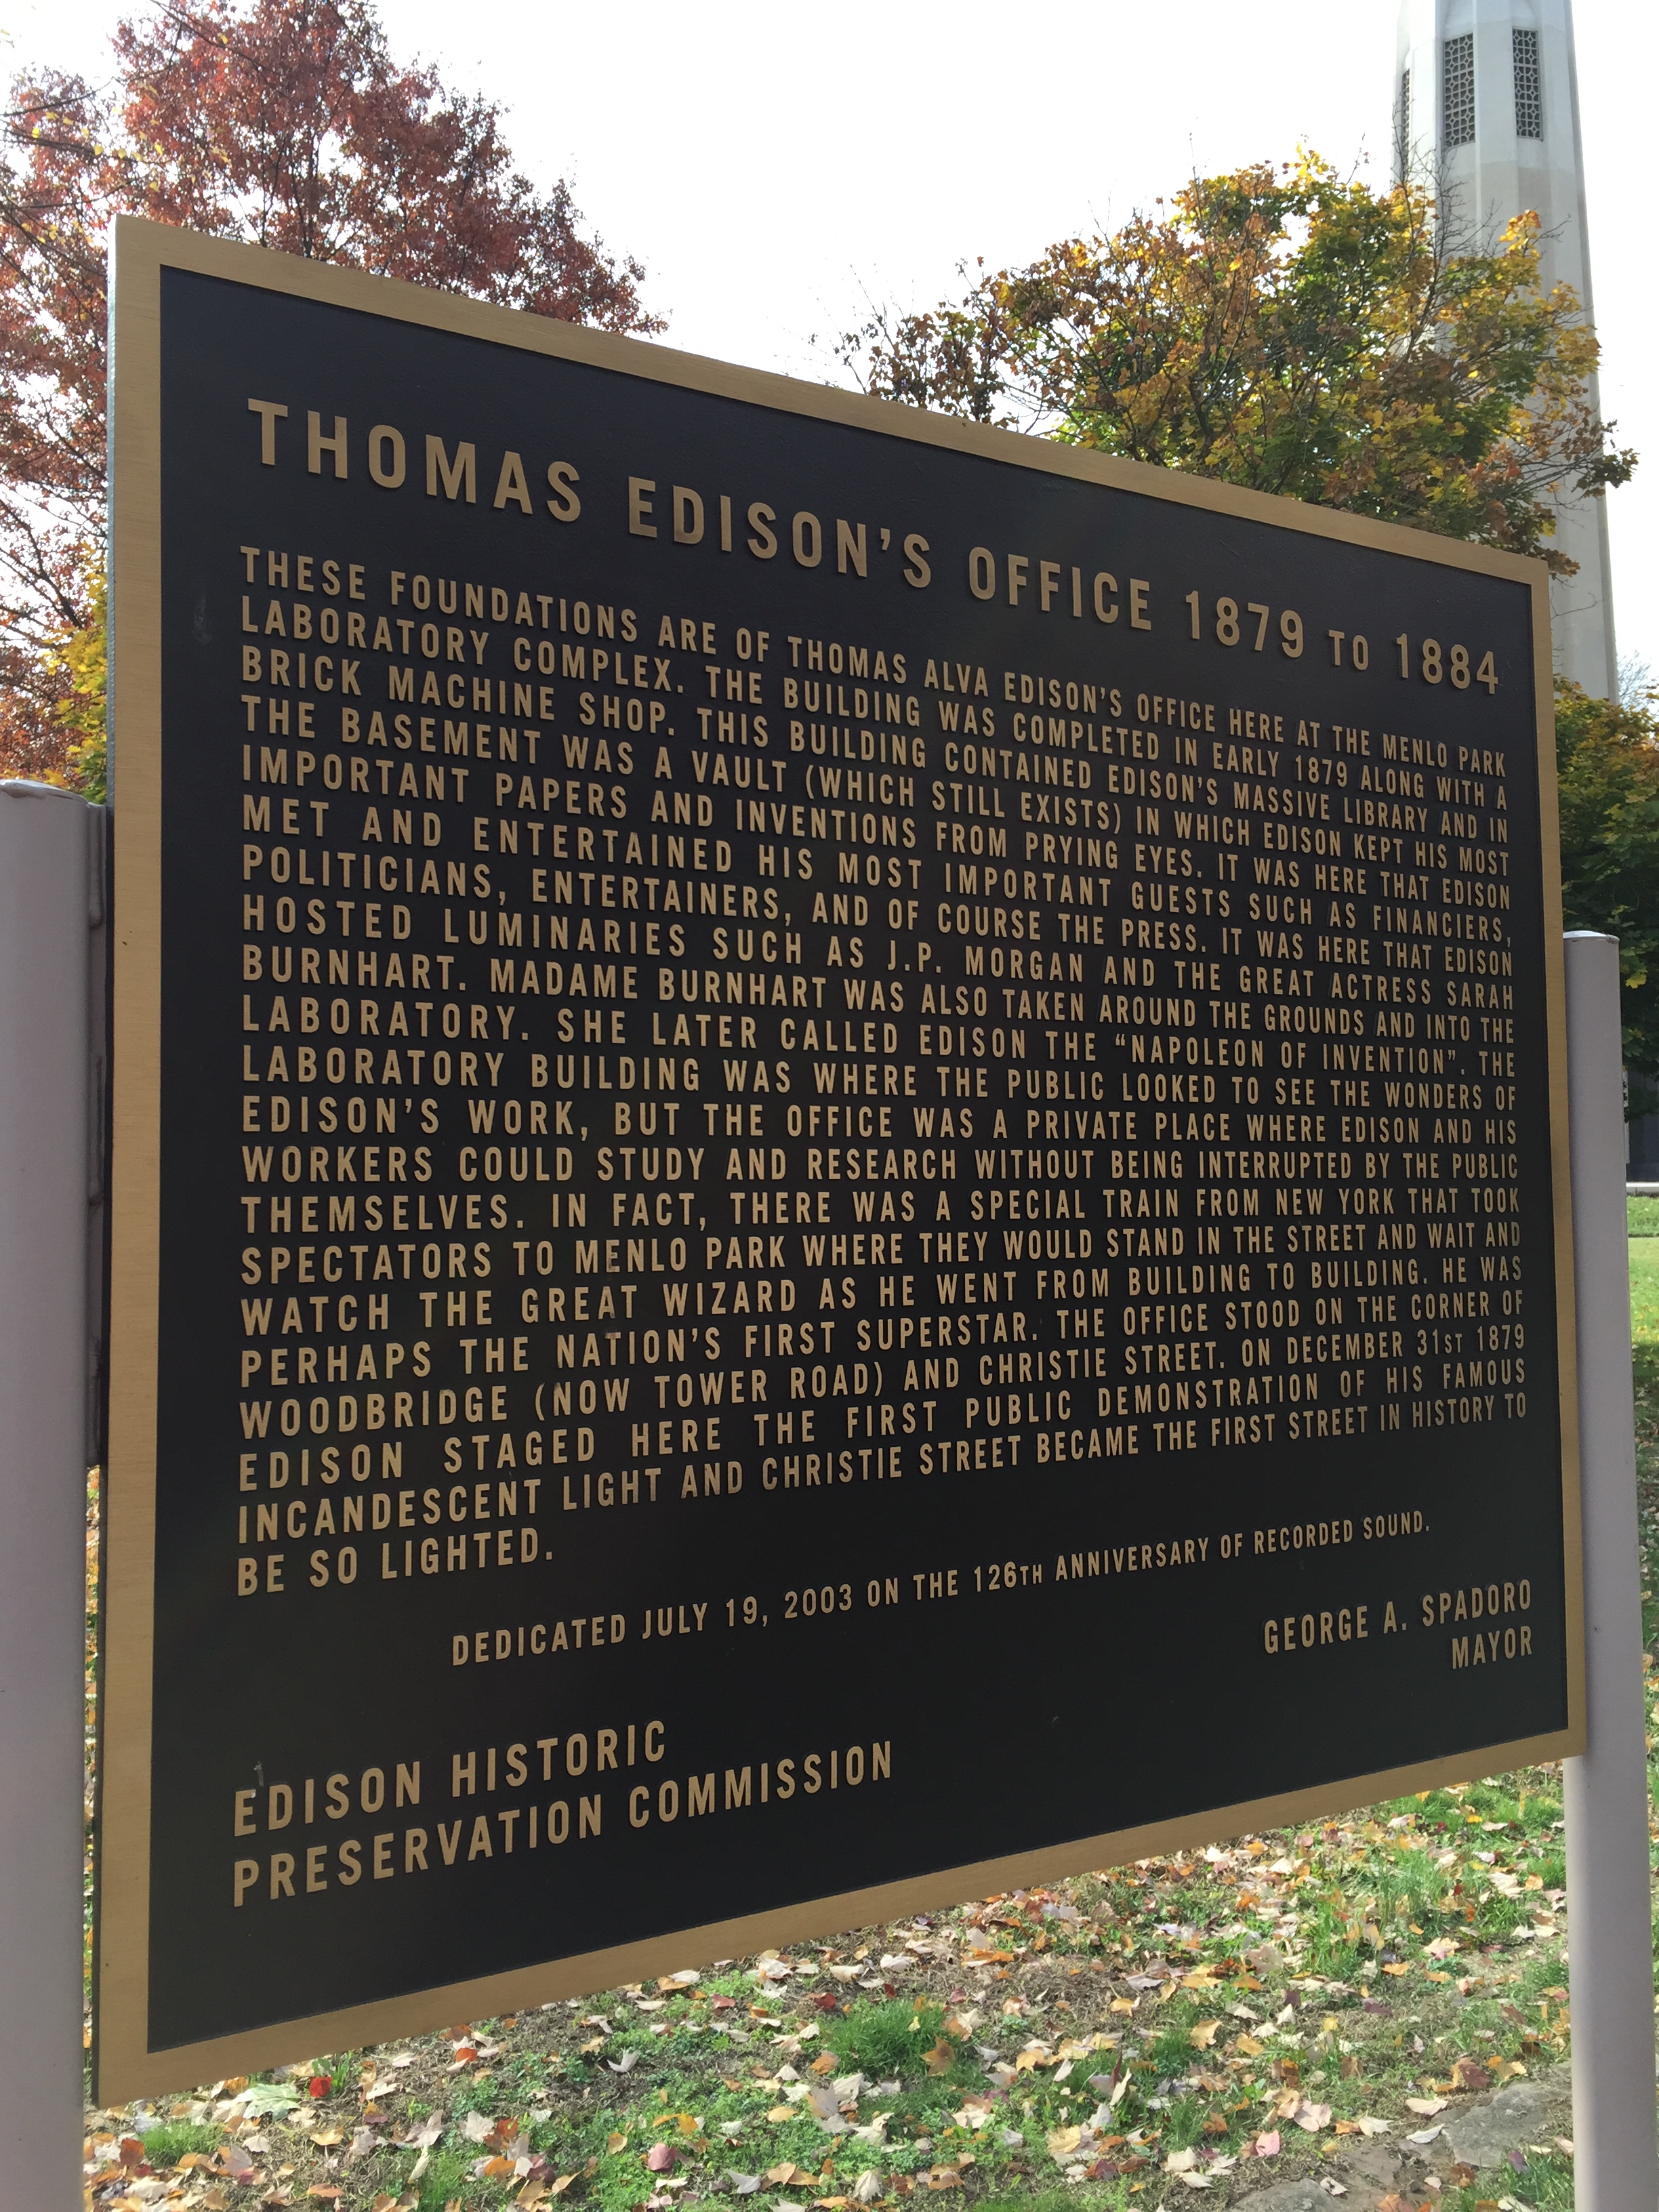 Edison's office site at Menlo Park NJ.